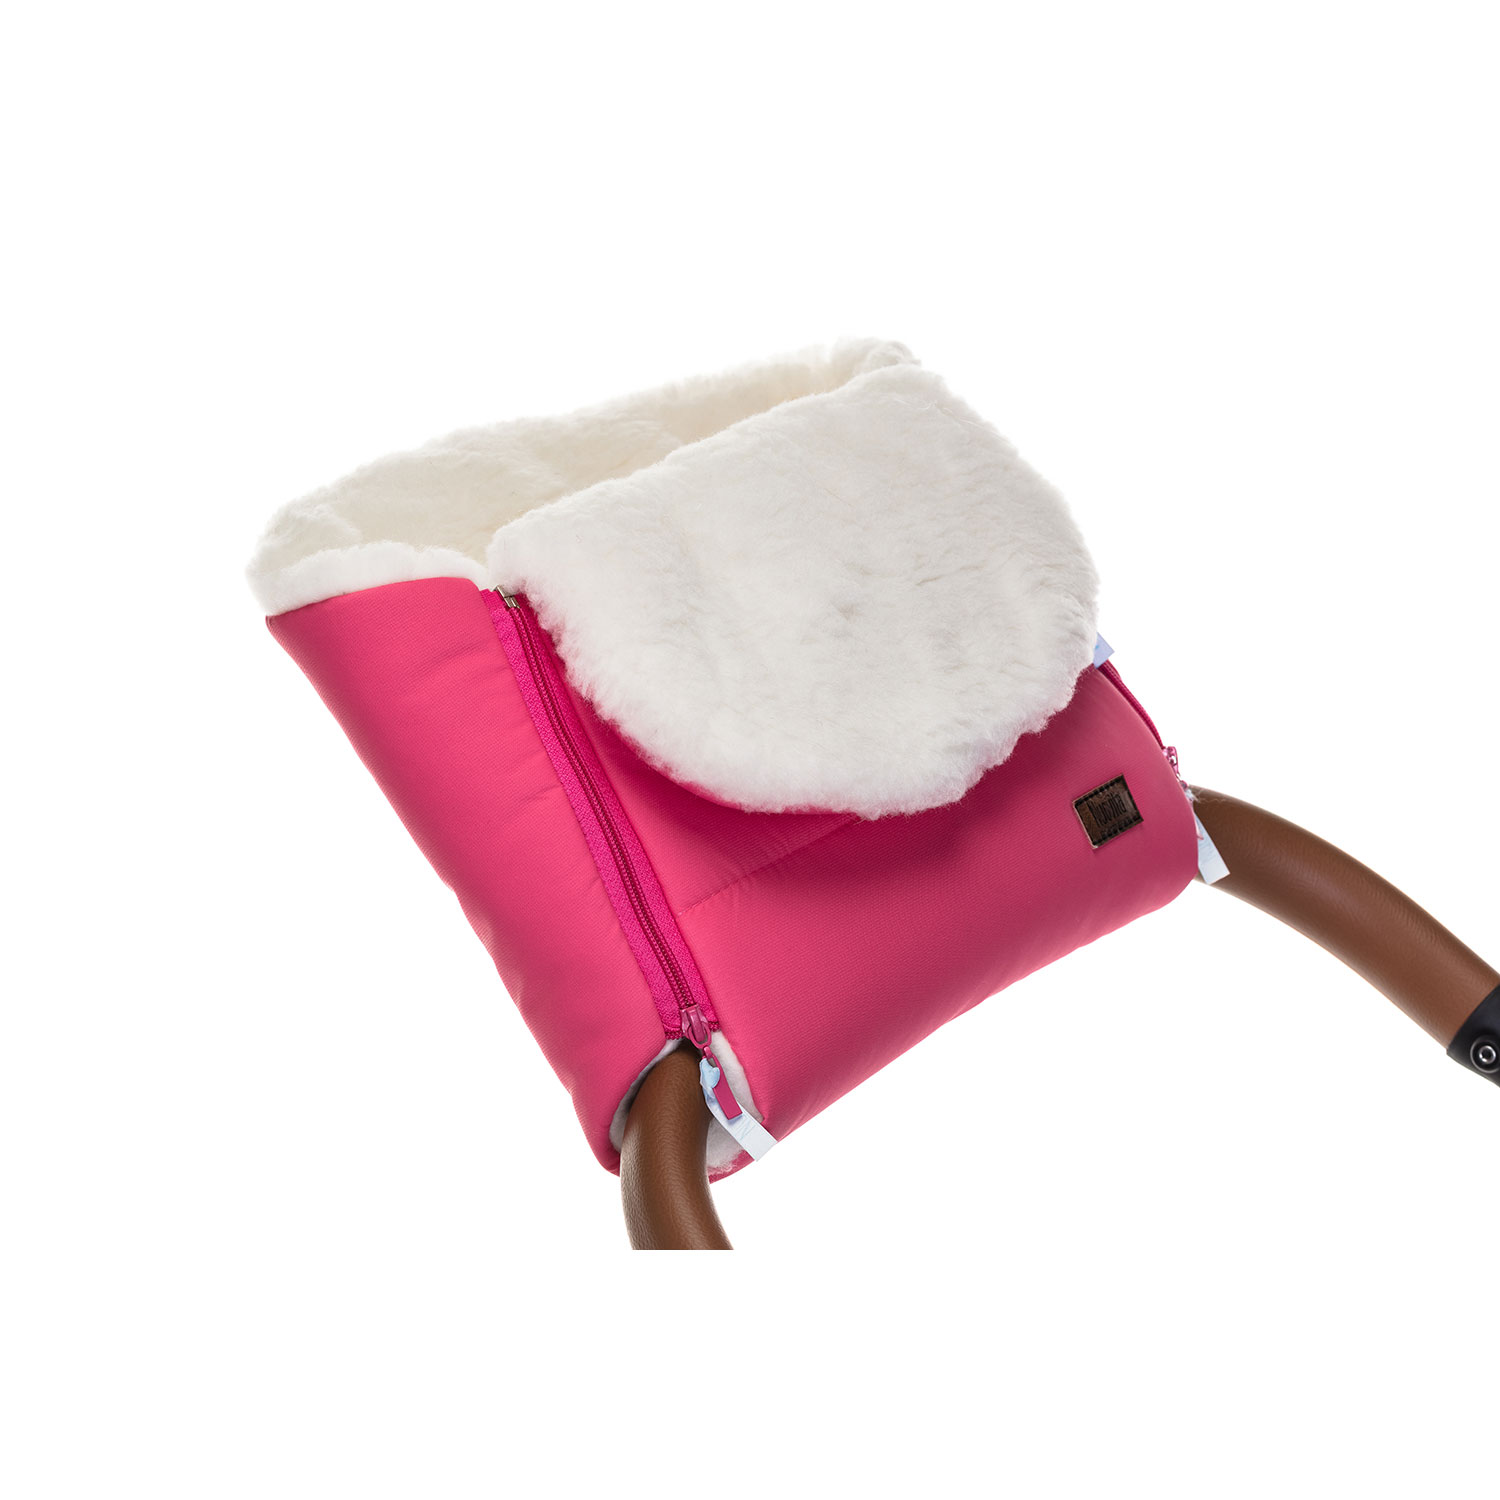 Муфта меховая для коляски Nuovita Vichingo Bianco розовая муфта меховая для коляски nuovita vichingo bianco розовая